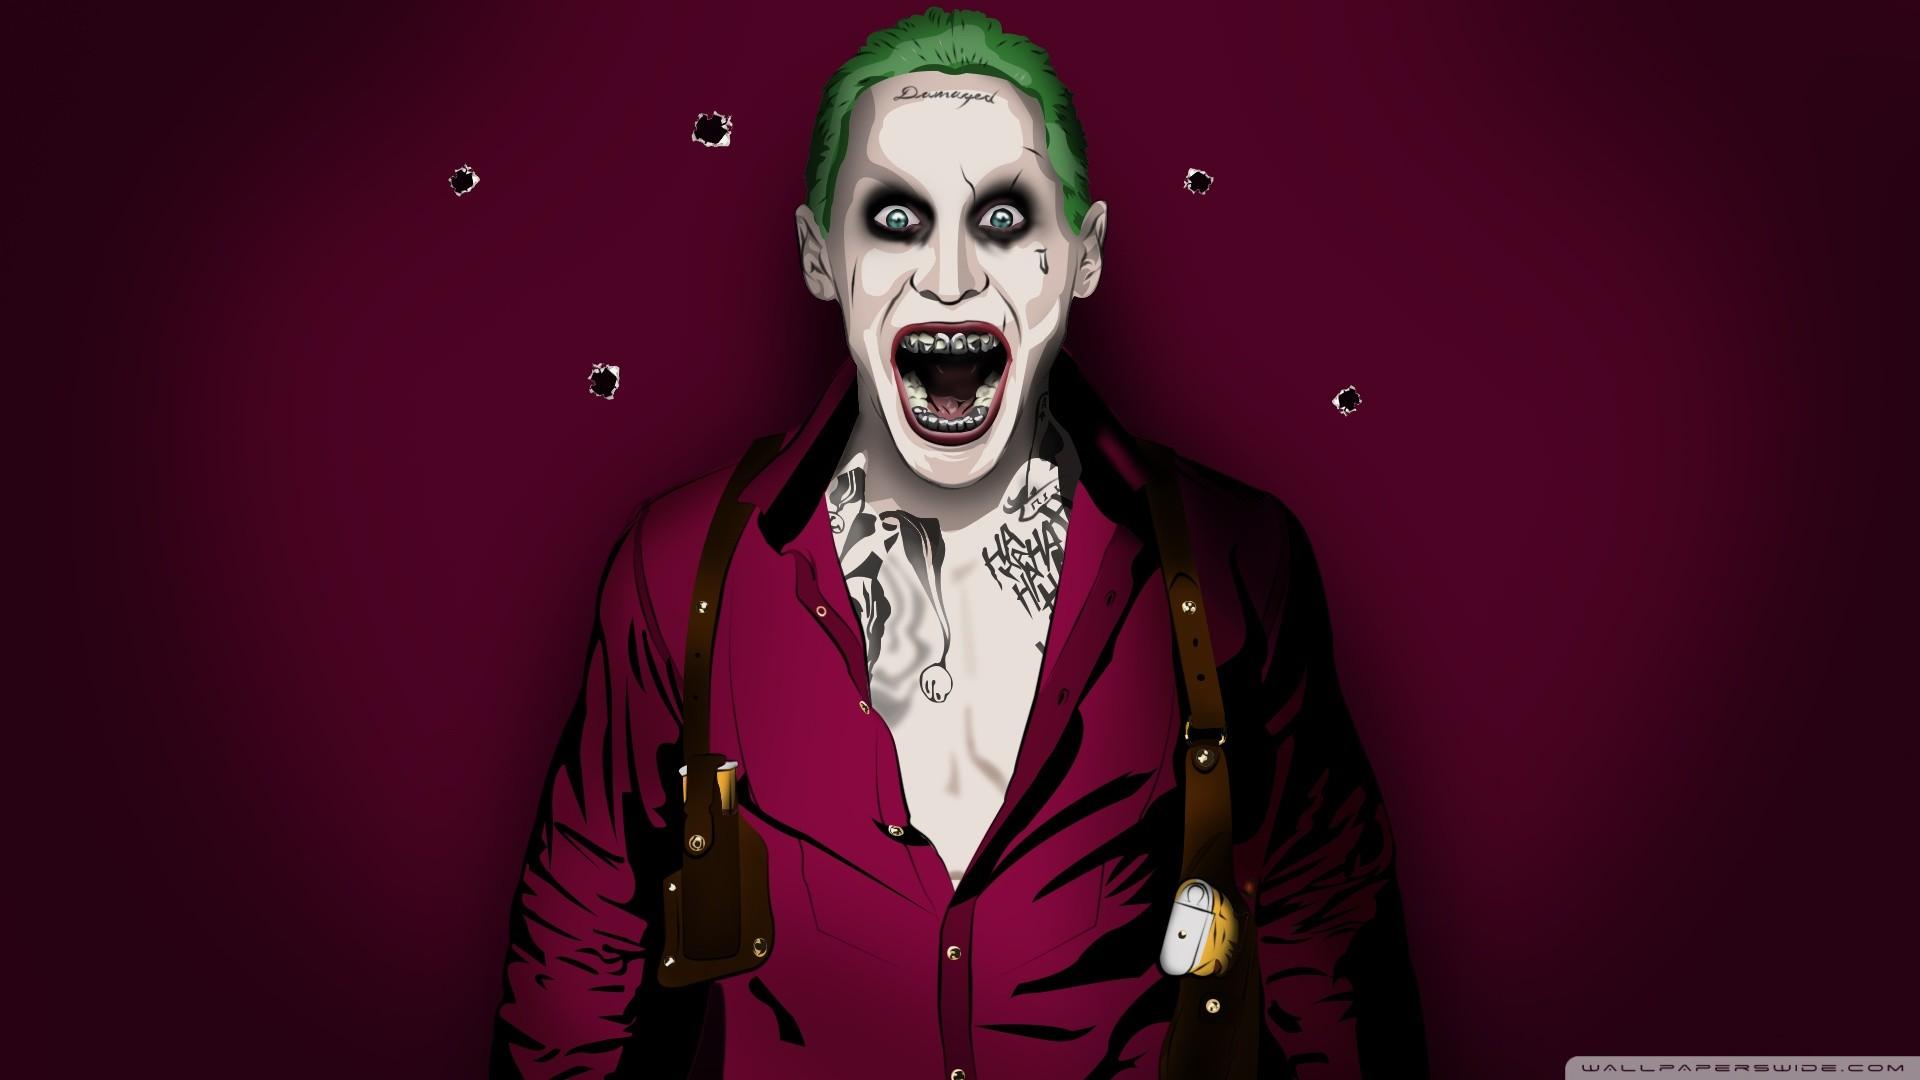 Jared Leto Joker Wallpaper (the best image in 2018)